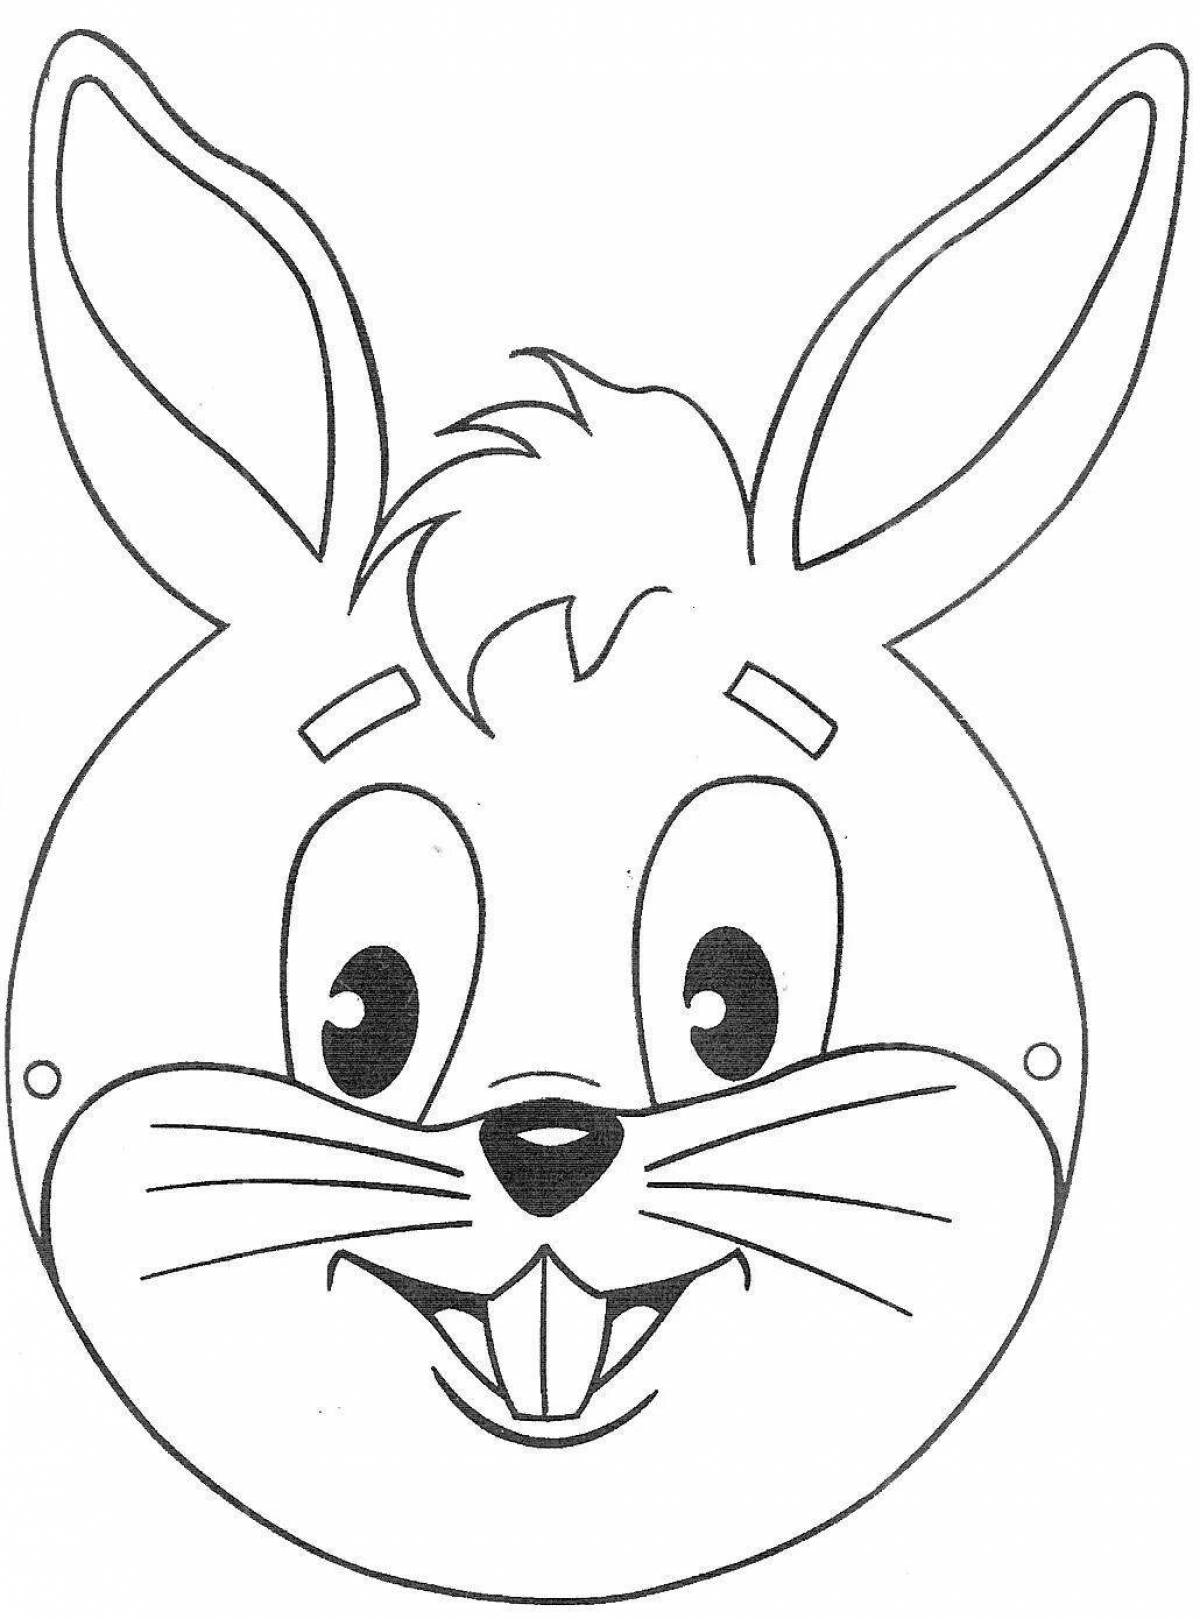 Fun coloring page bunny face